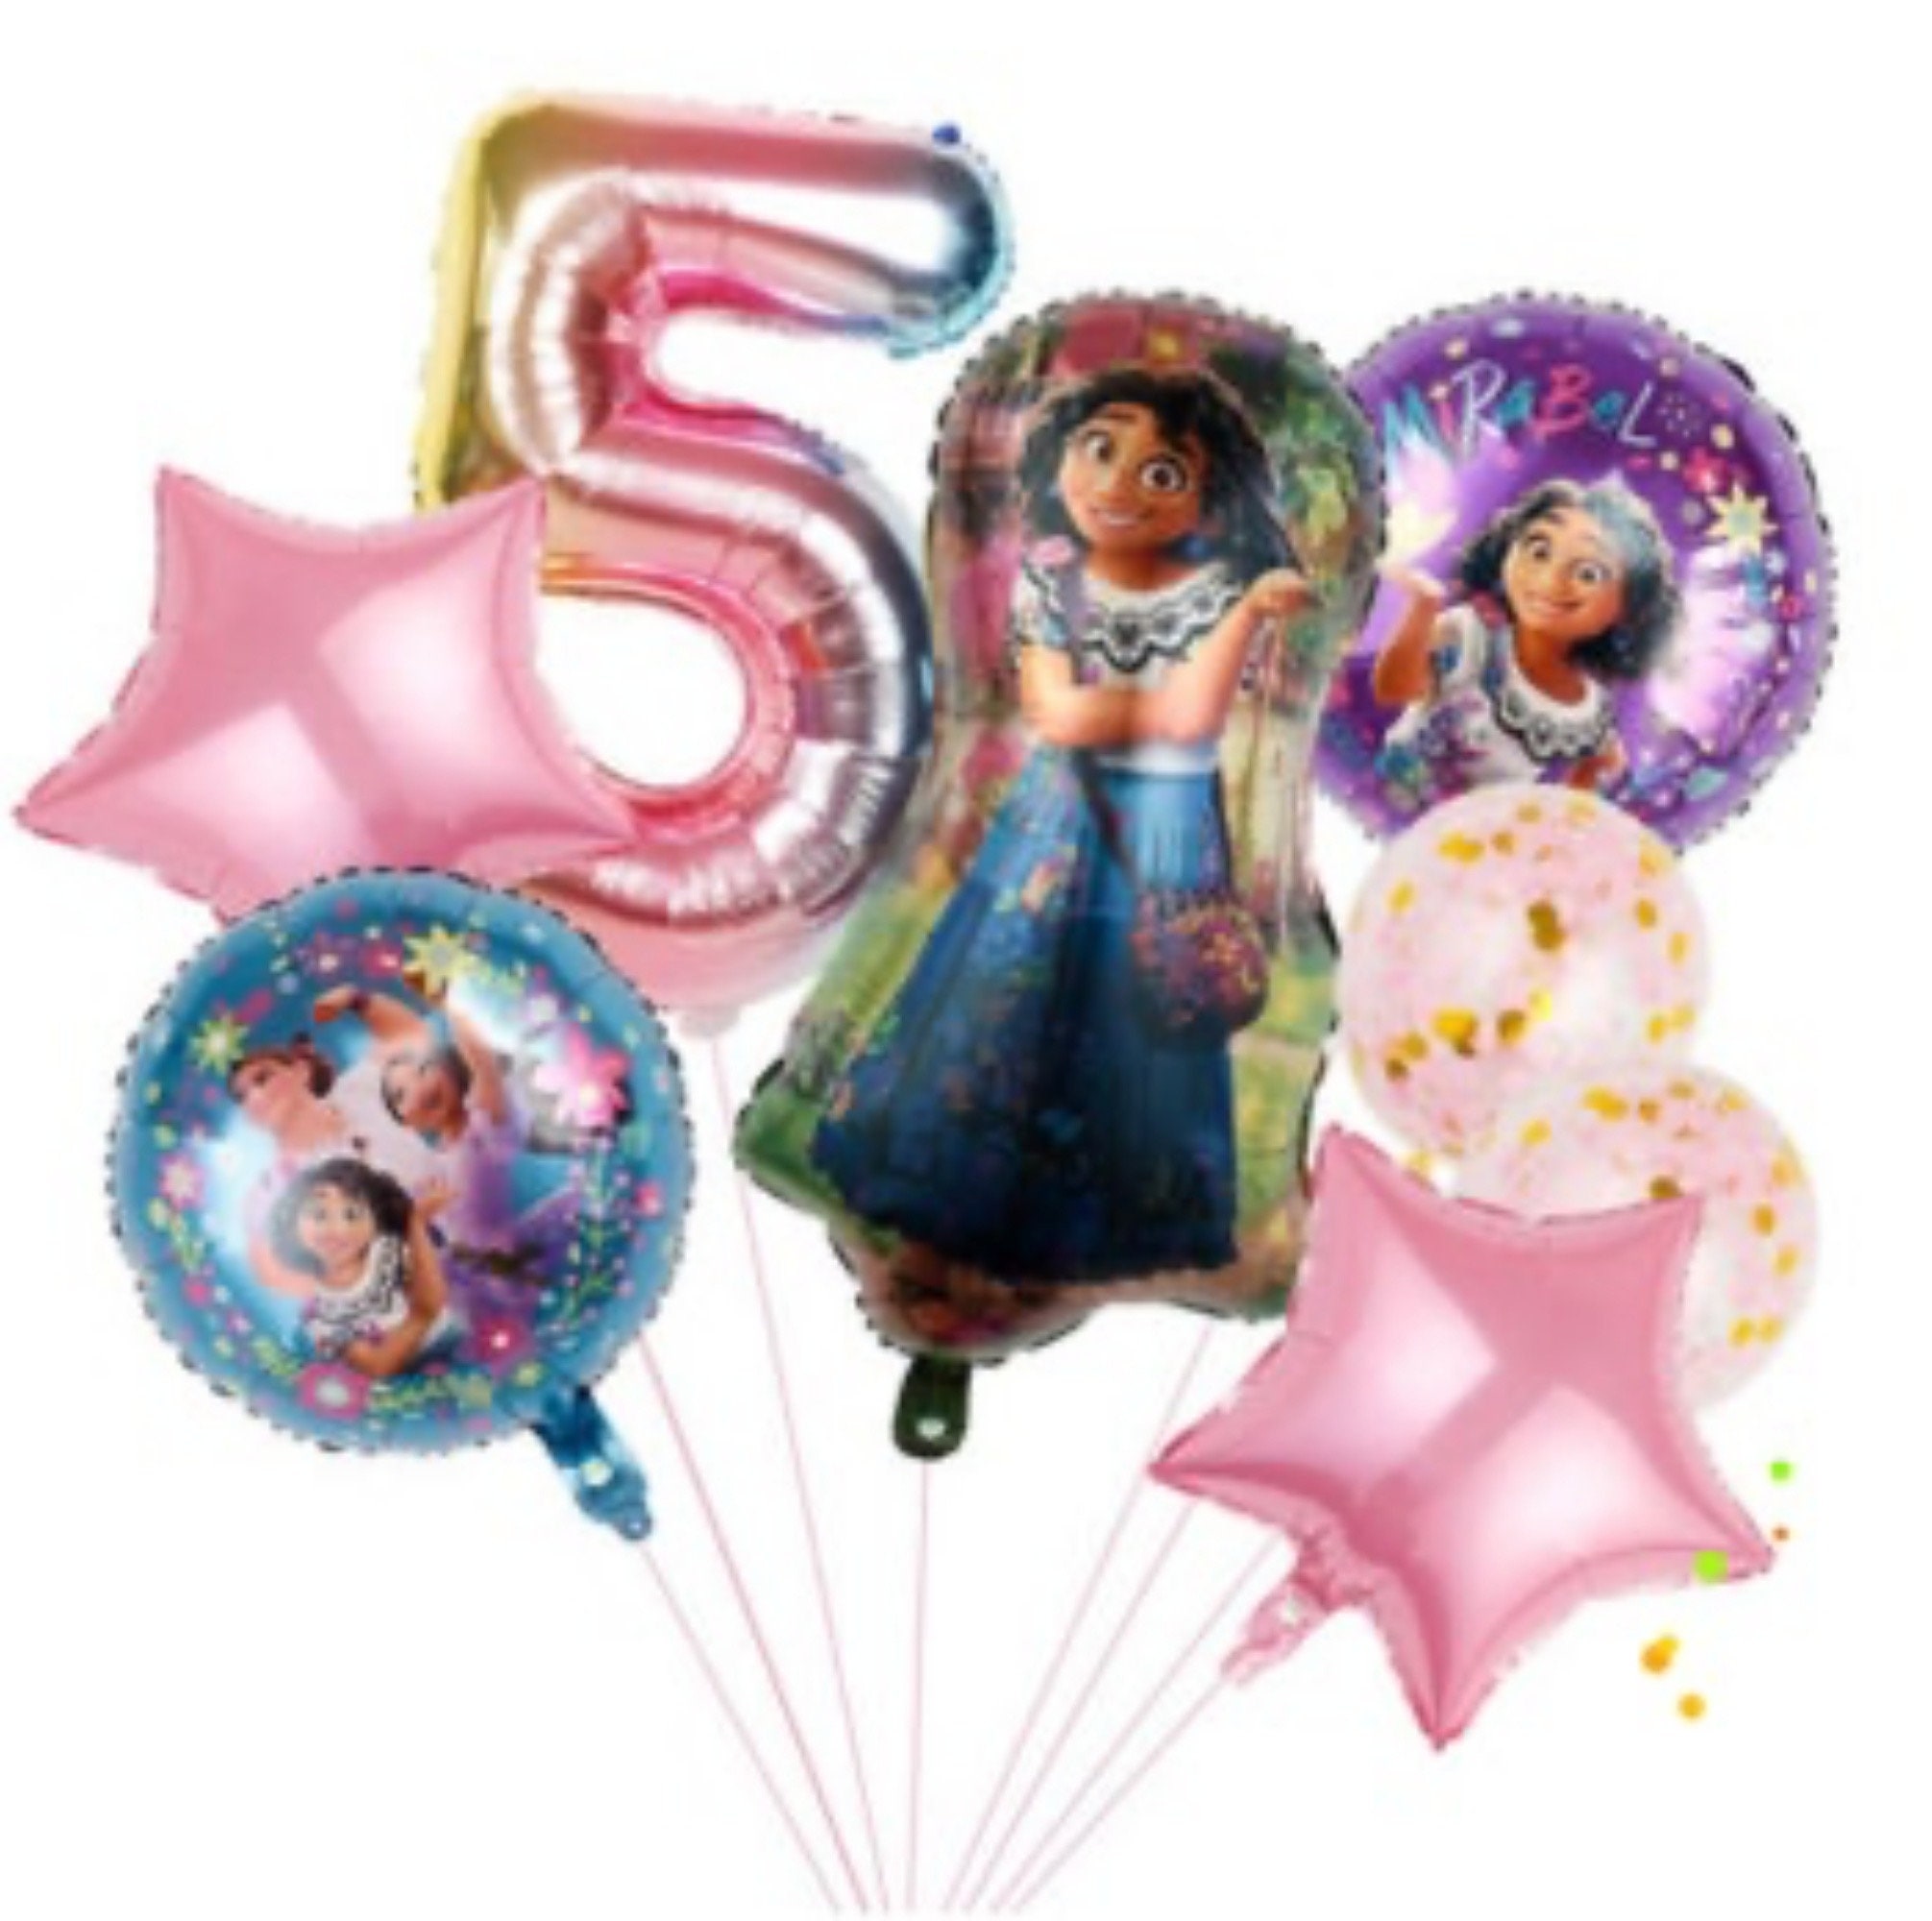 Encanto Decoration - Natty Balloons